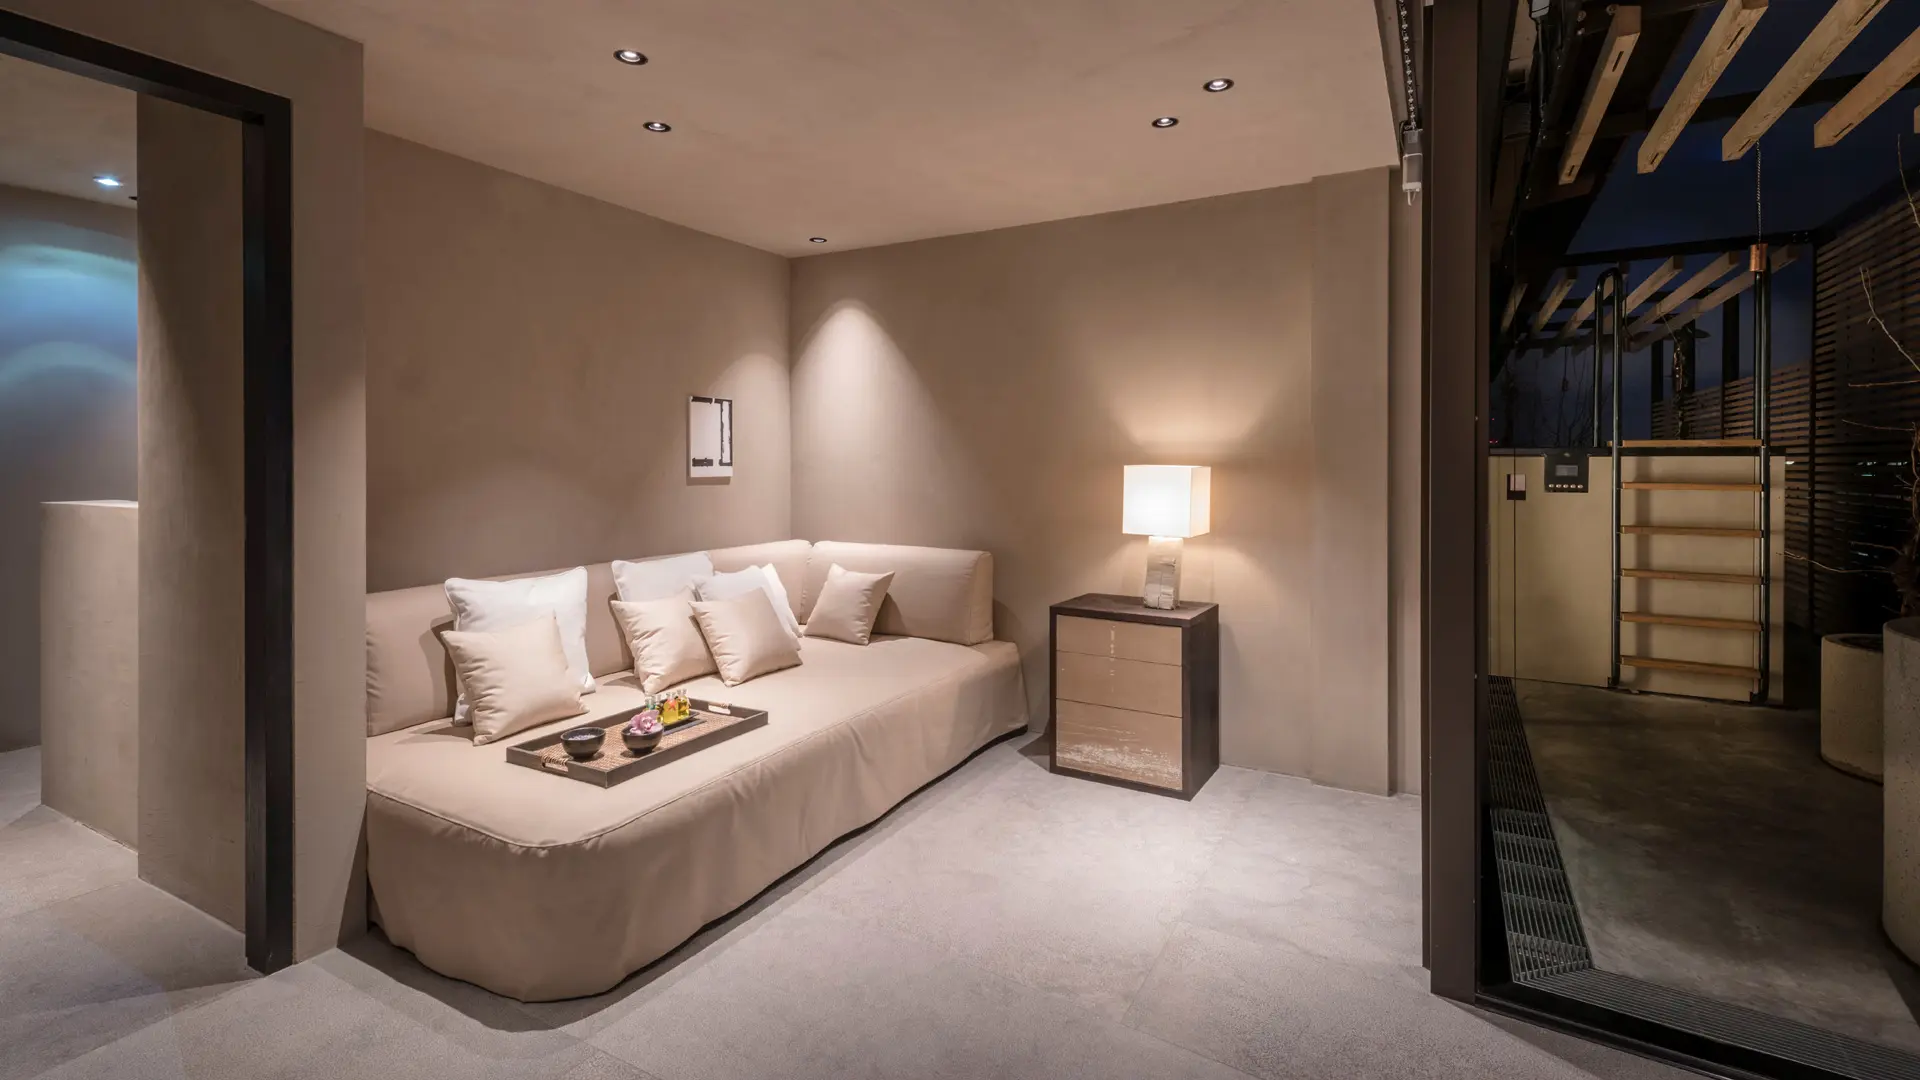 Hotel review Accommodation' - Bayerischer Hof - 2